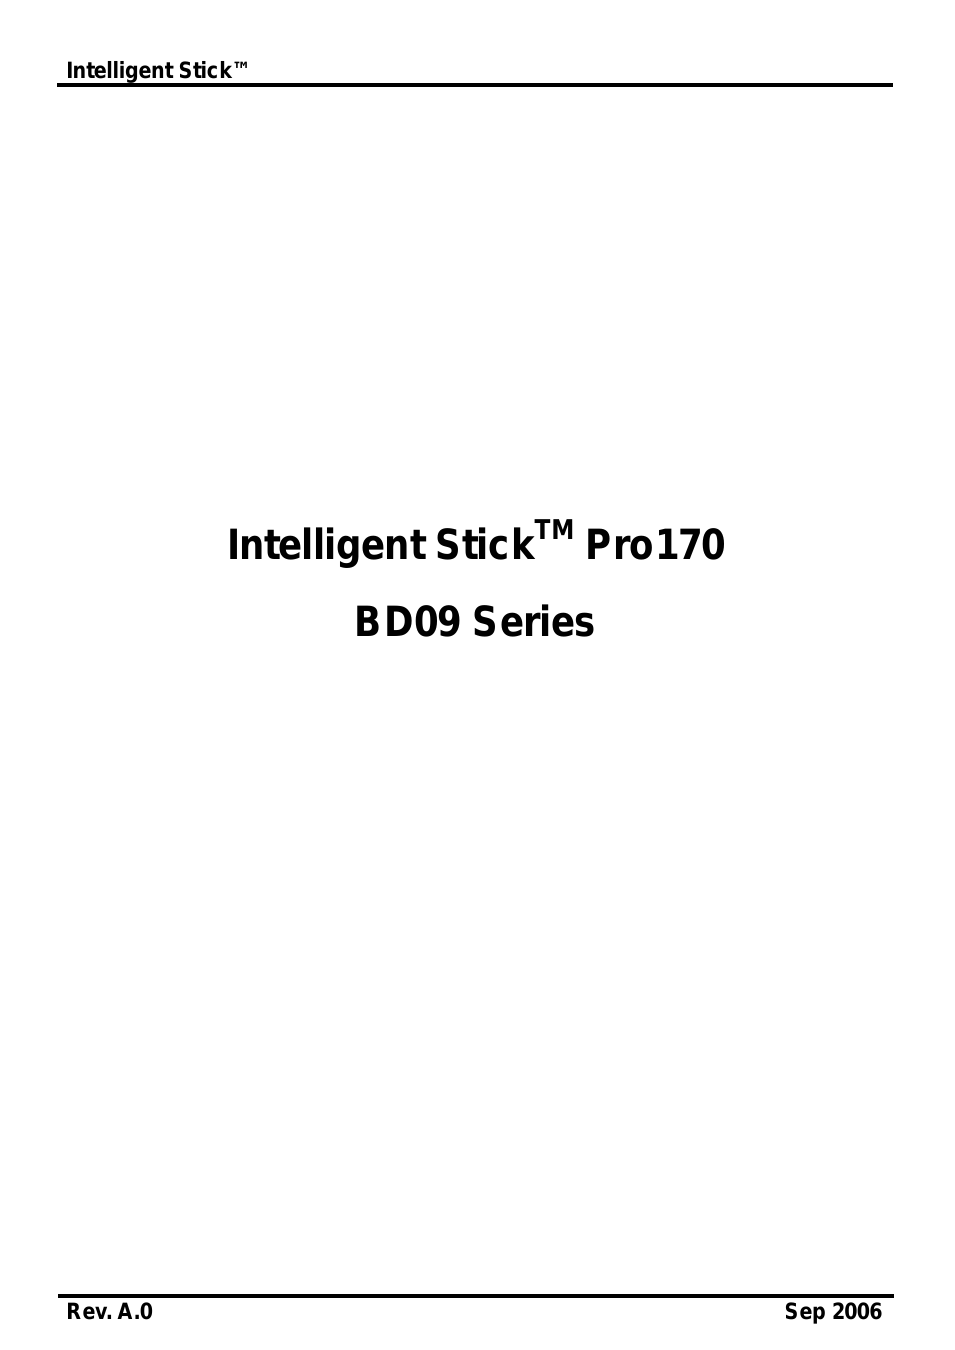 Intellient Stick Pro 170